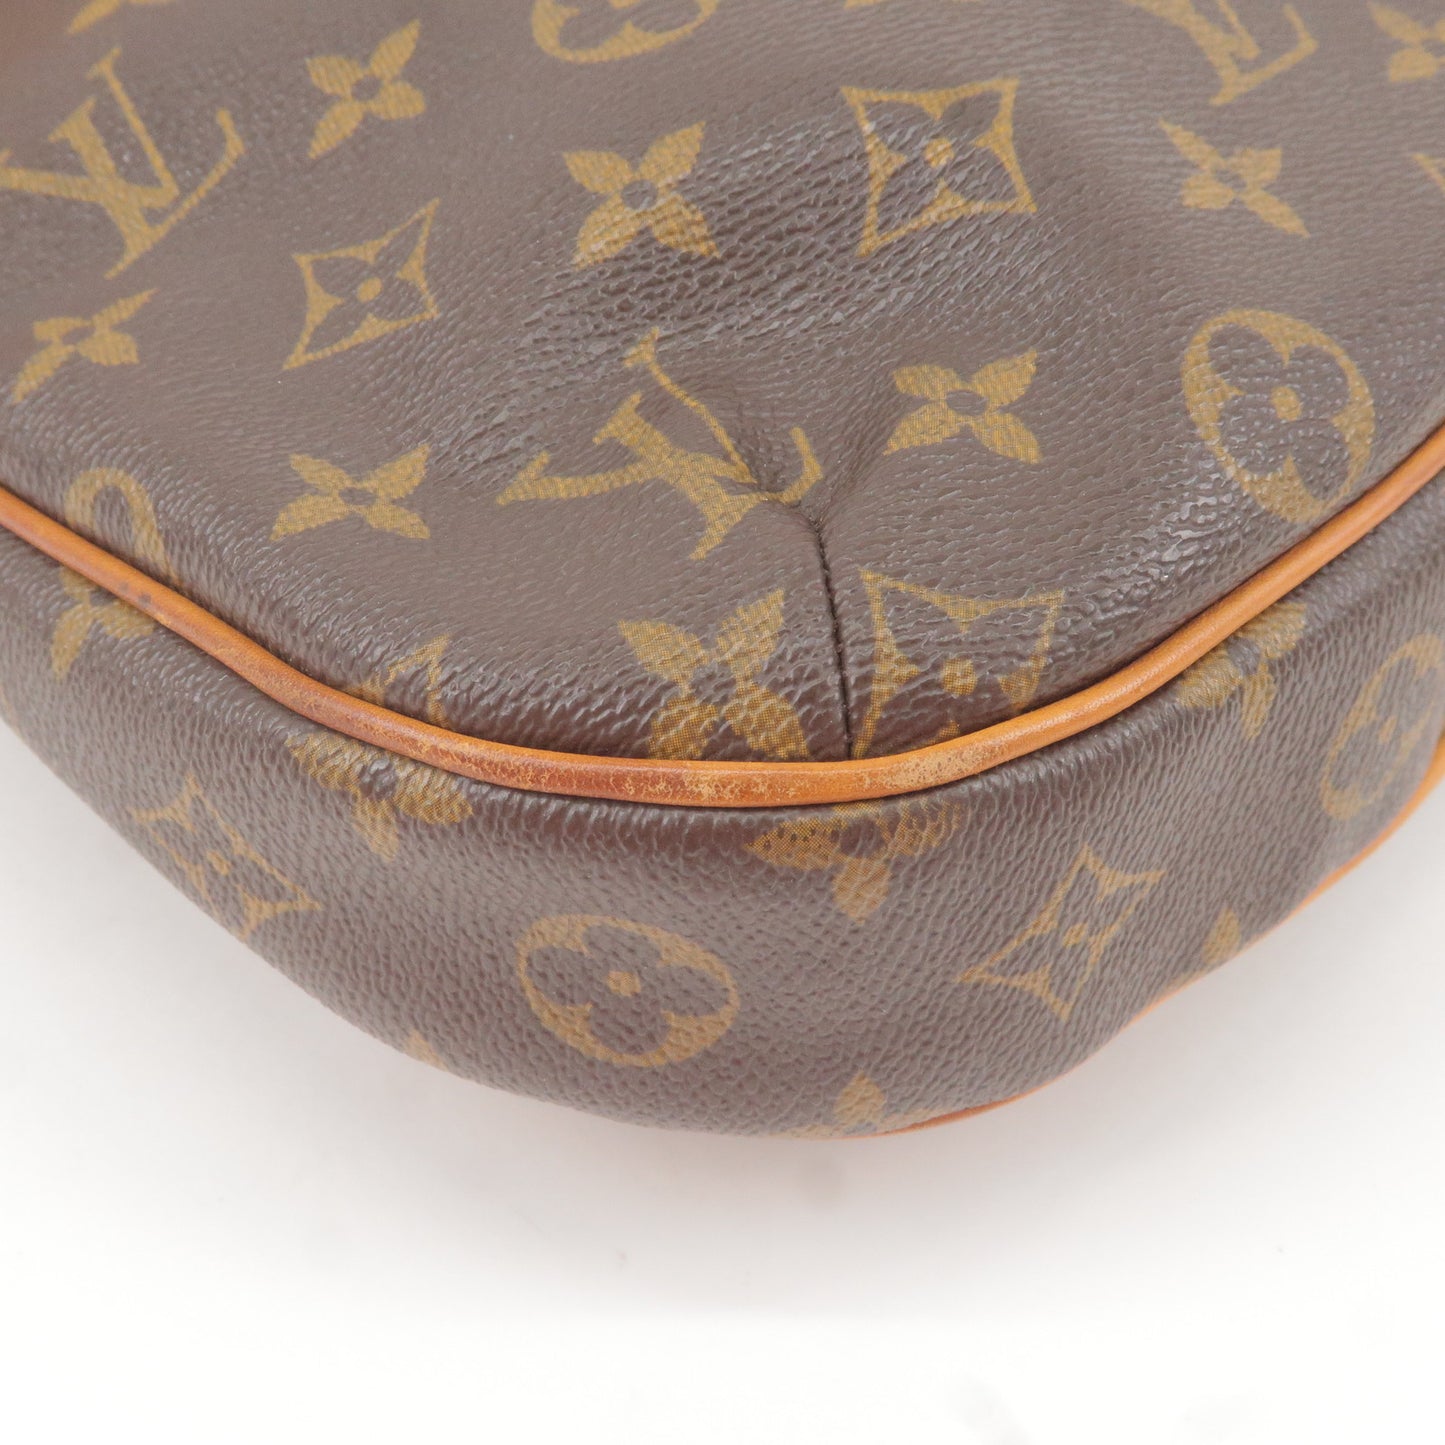 Louis Vuitton Monogram Odeon MM Crossbody Shoulder Bag M56389